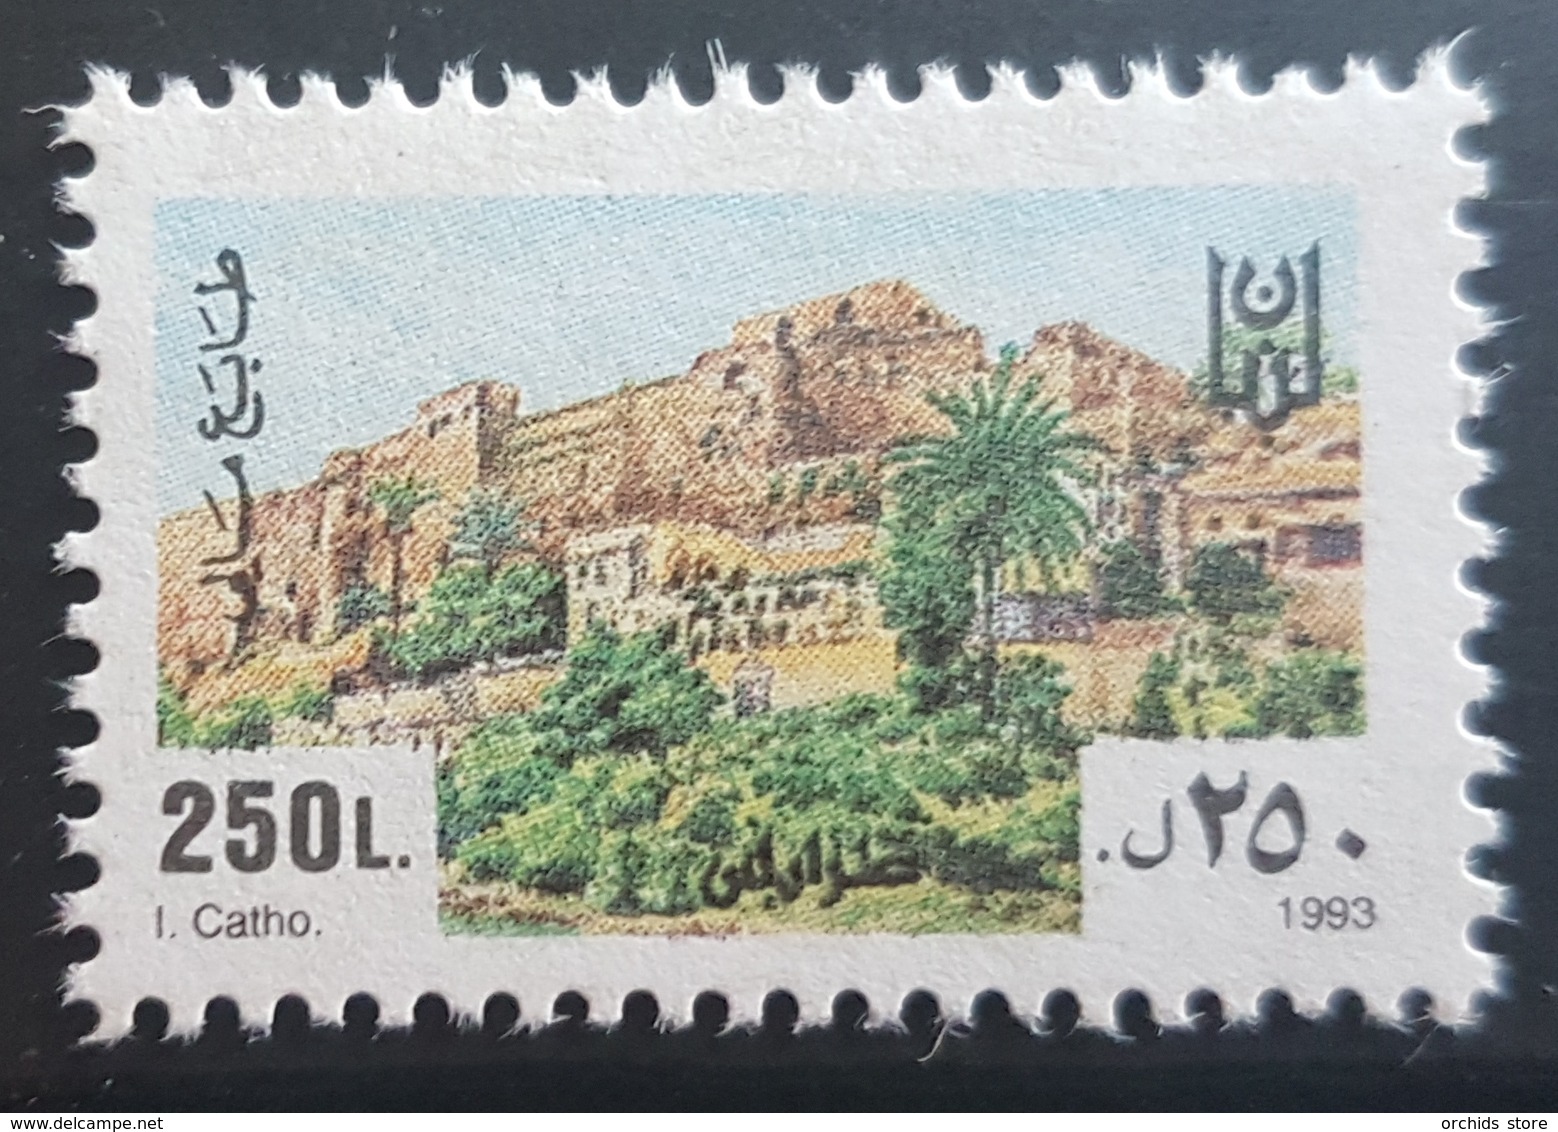 NO11 - Lebanon 1993 Fiscal Revenue Stamp Tripoli Citadel 250L MNH - Lebanon